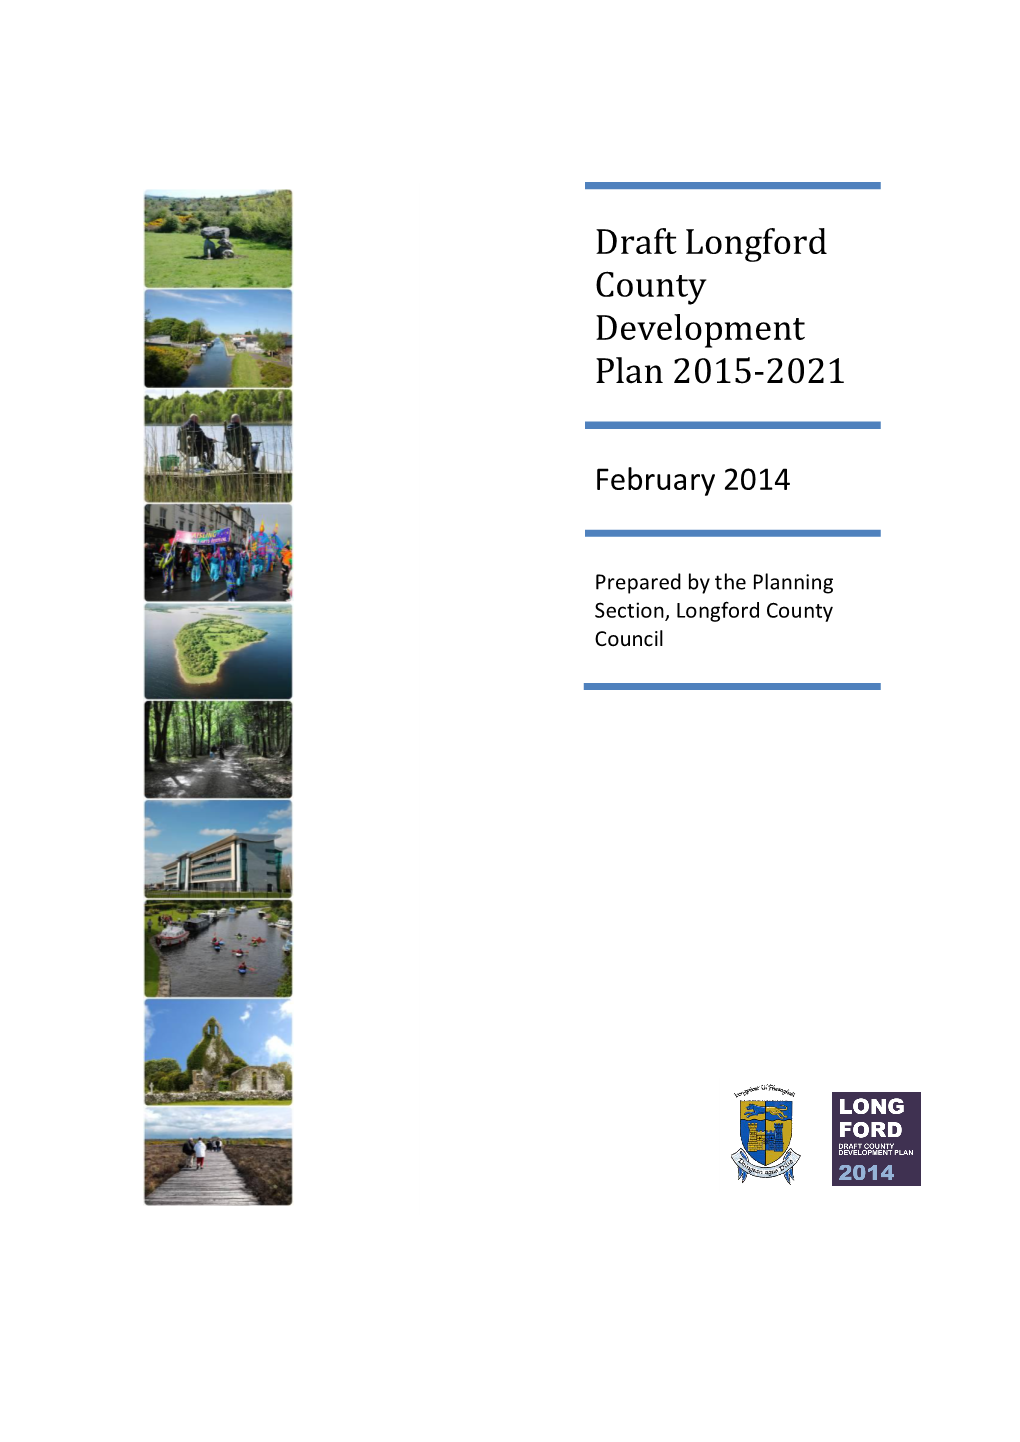 Draft Longford County Development Plan 2015-2021